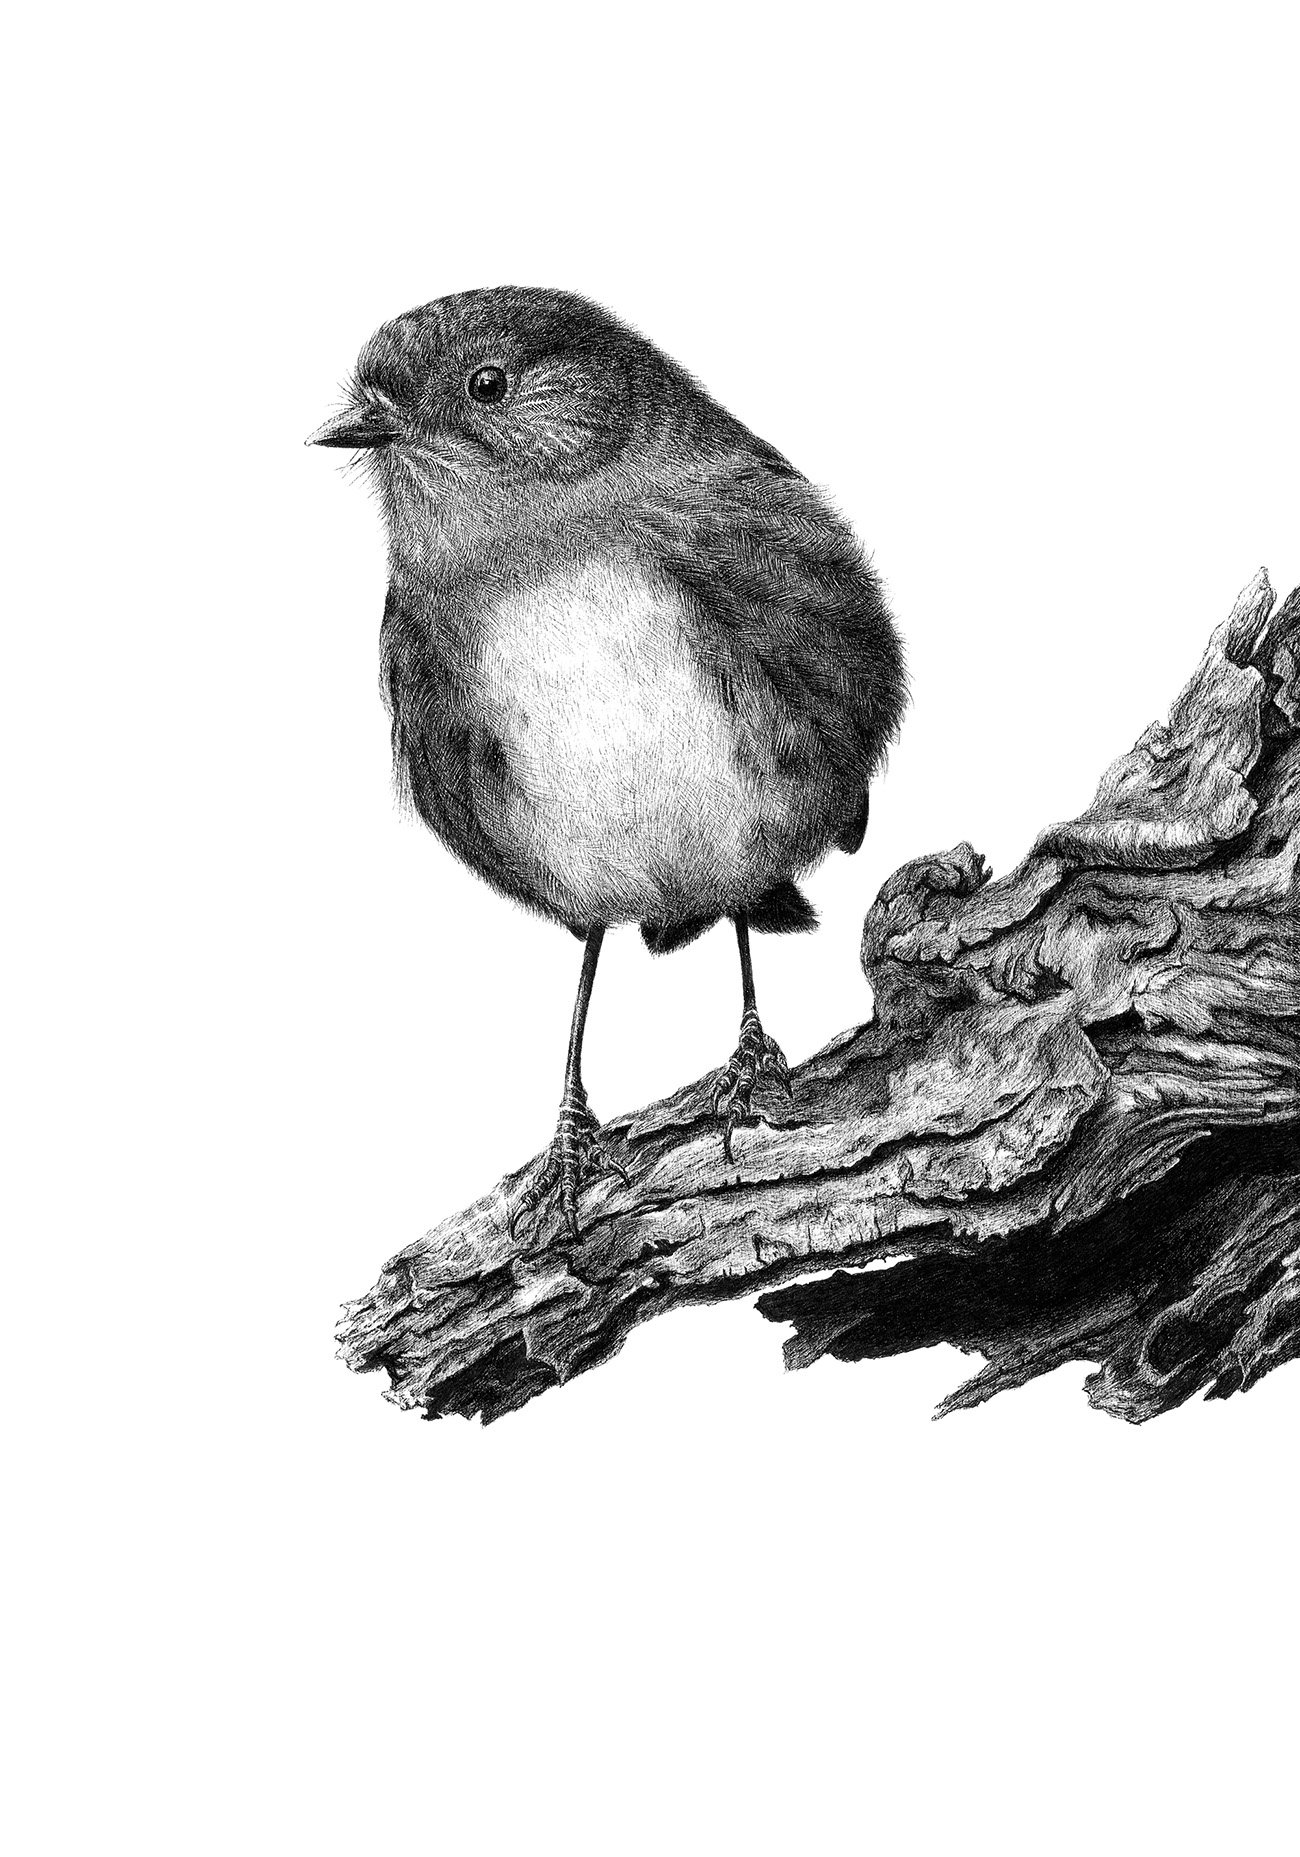 SOLD 'Inquisitive Robin' Original (click image for prints)